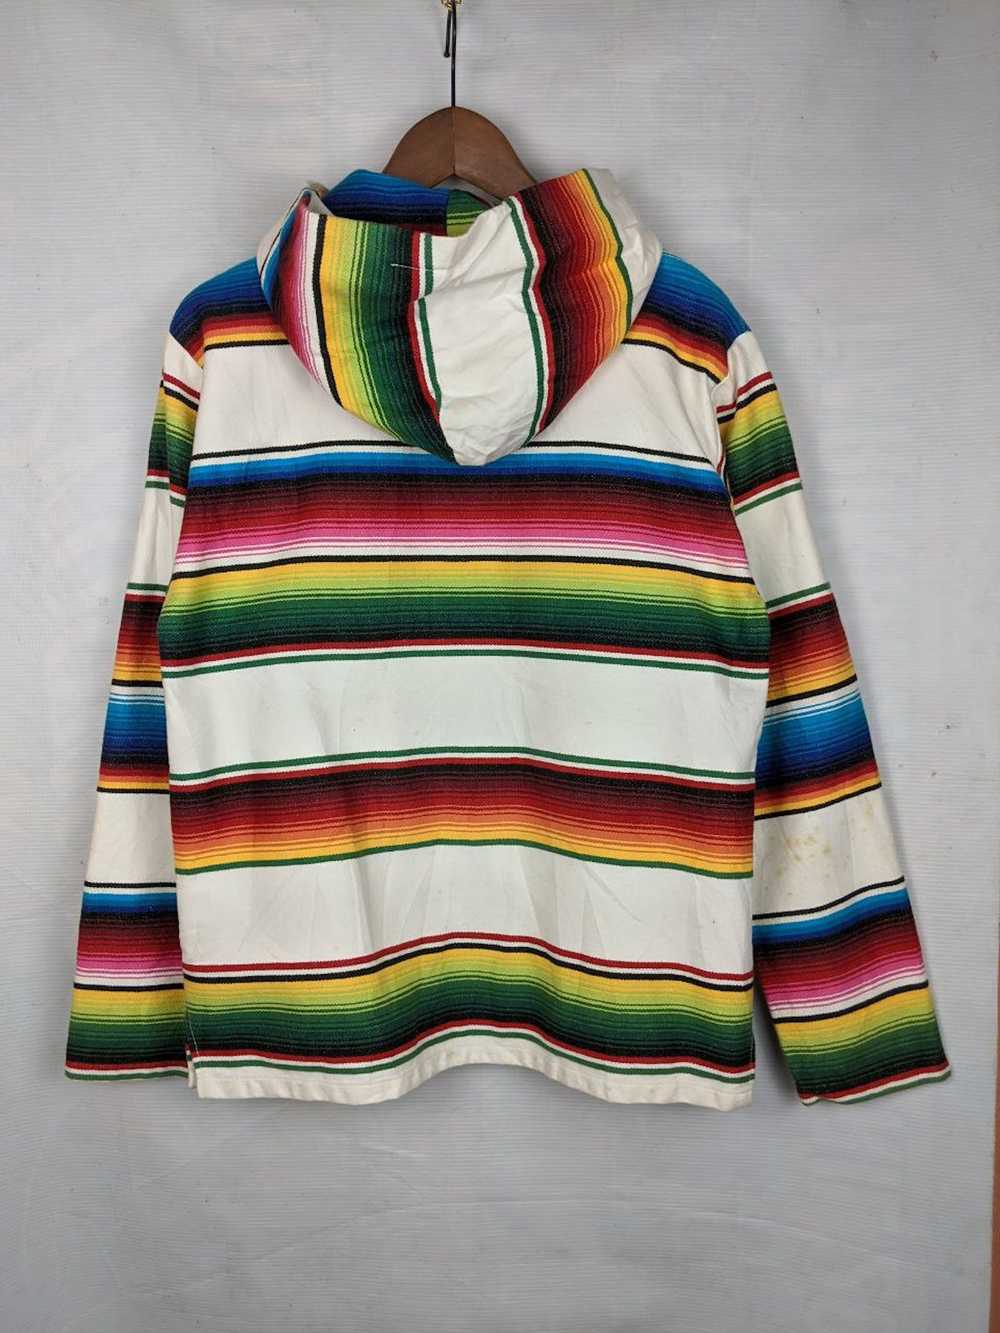 Japanese Brand cootie production rainbow jacket - image 9